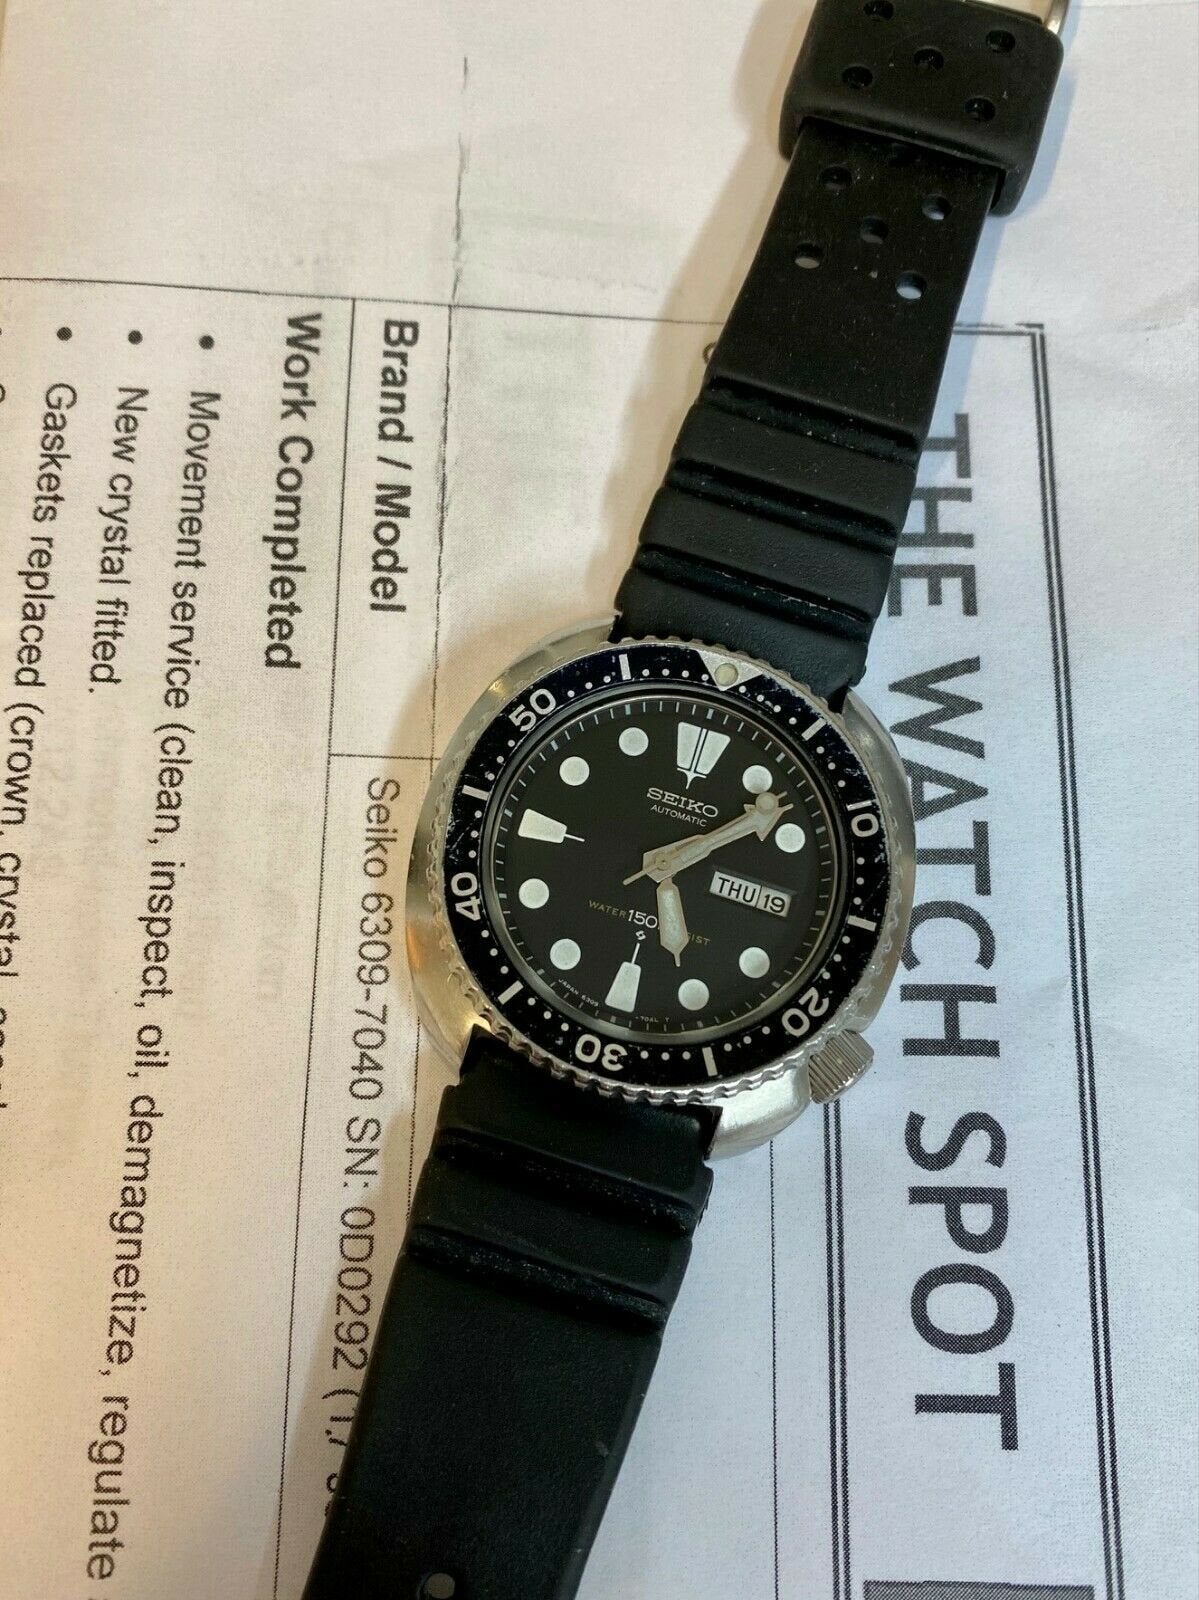 375 GBP] Seiko 6309 7040 Turtle Watch - All Original - Suwa Dial 1980 |  WatchUSeek Watch Forums